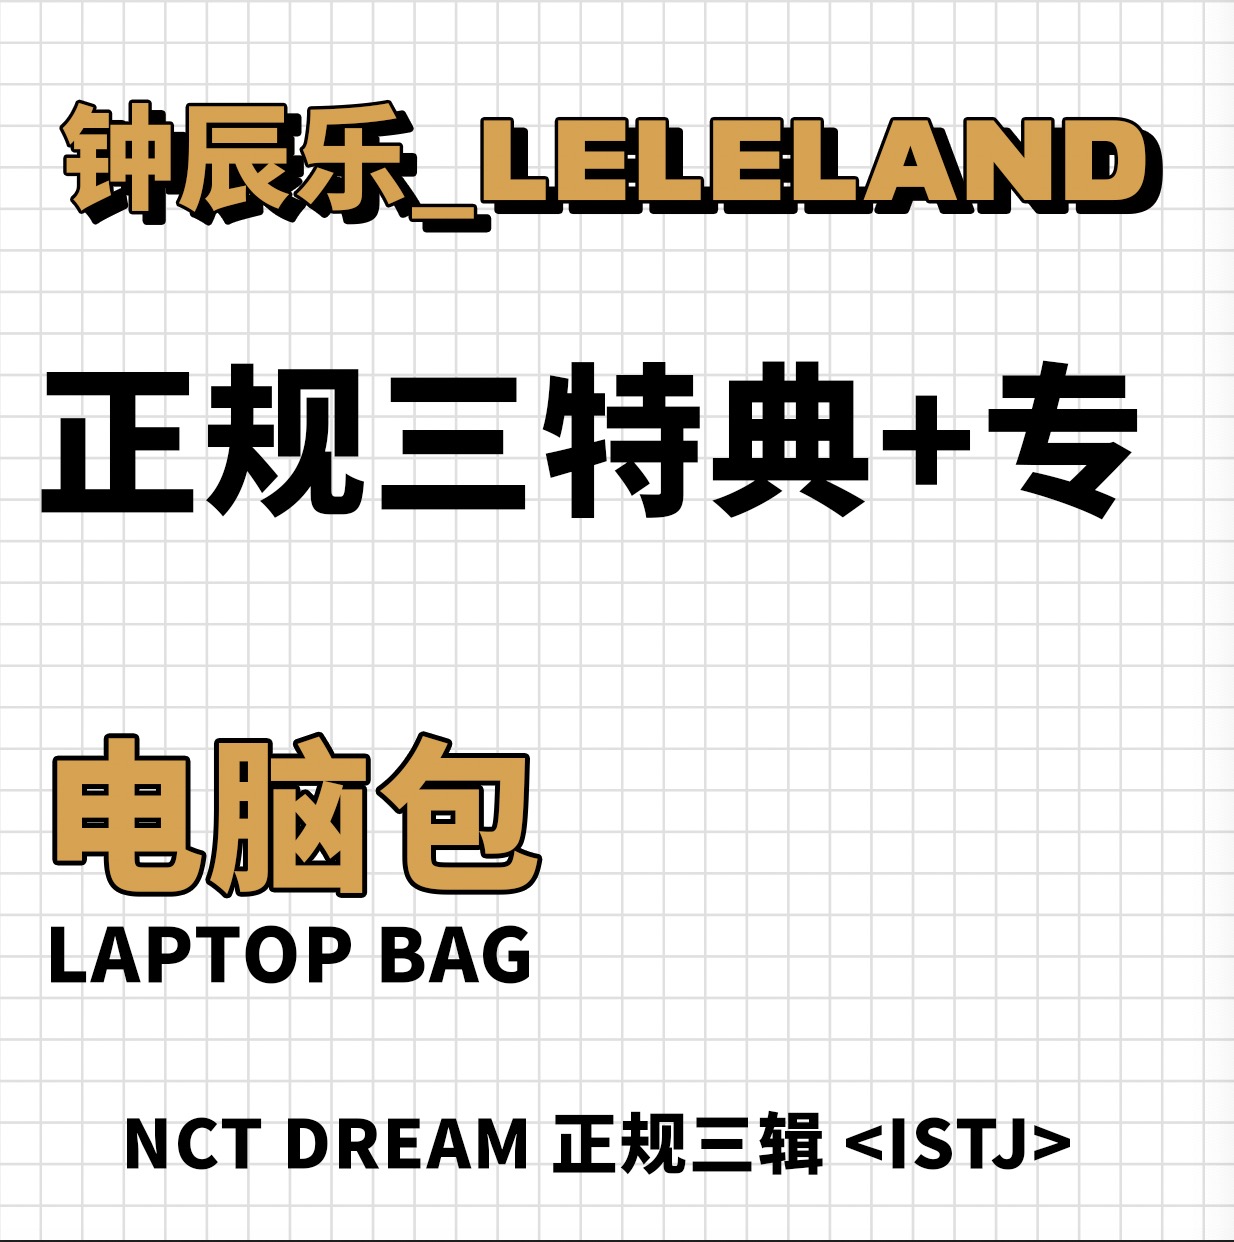 [全款 电脑包特典专] NCT DREAM - 正规3辑 [ISTJ]_钟辰乐吧_ChenLeBar